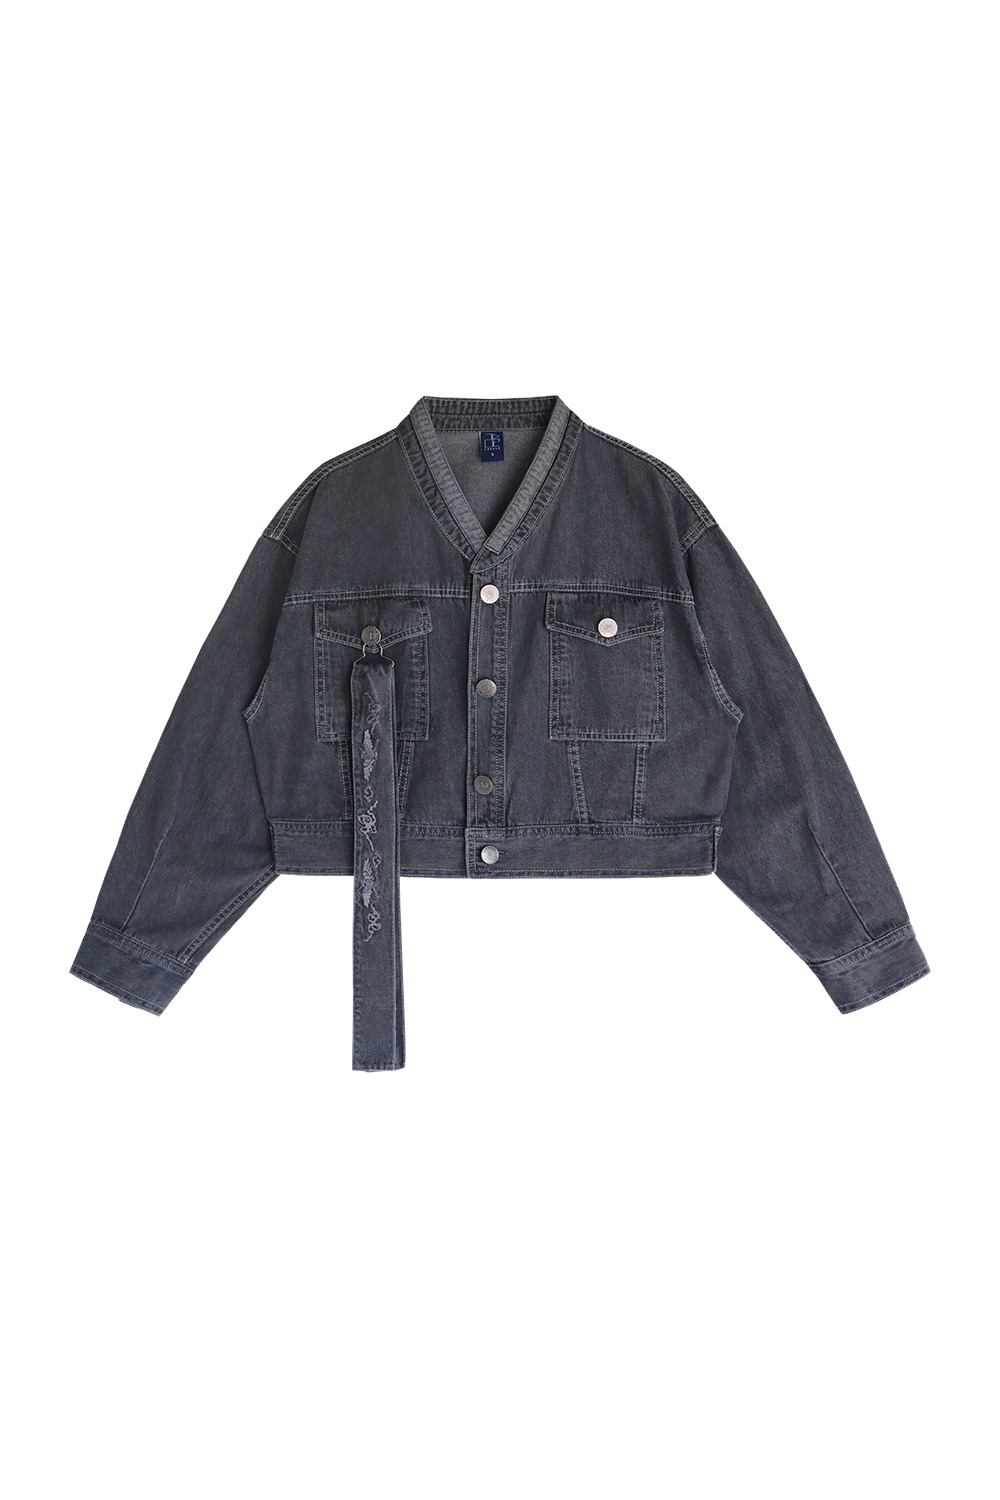 Un Hak Hanbok Jean Jacket [Crop-Black]  Pre-order